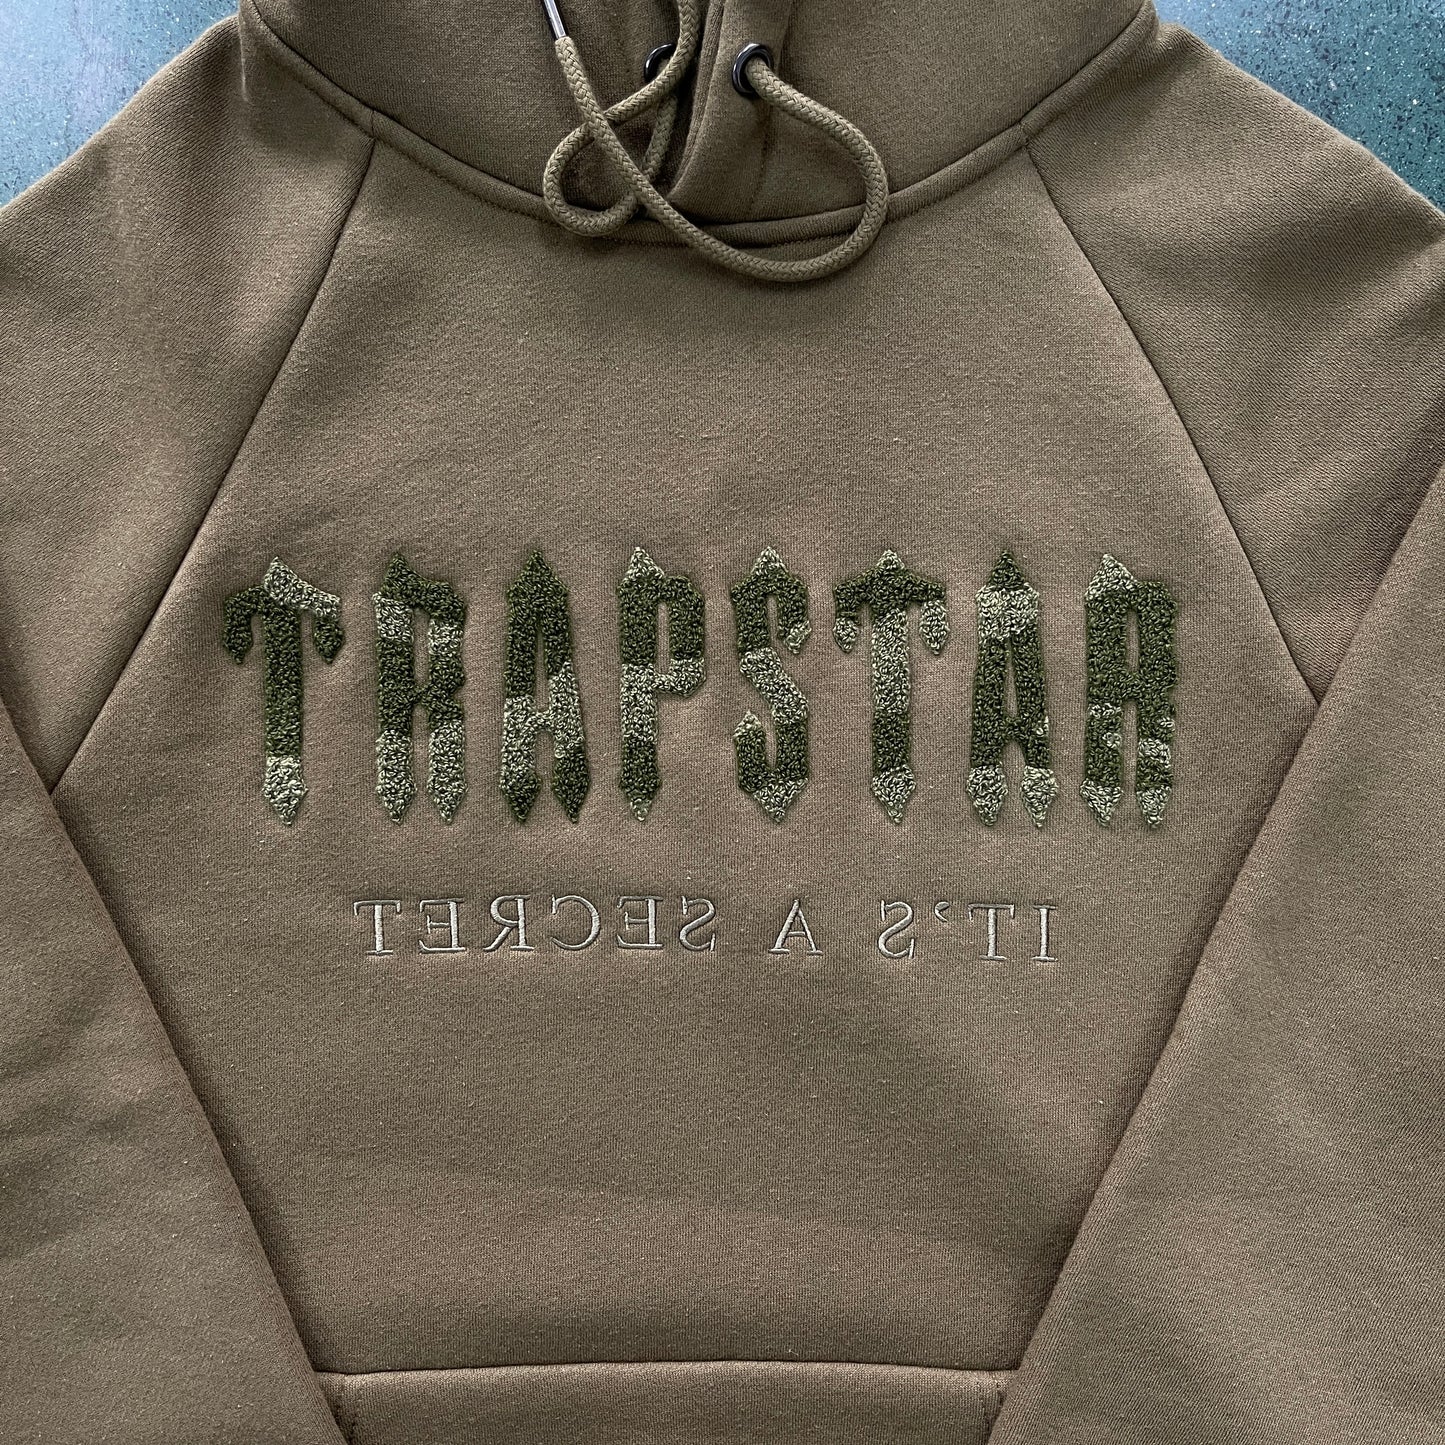 Trapstar Chenille Decoded Hoodie Tracksuit Sportswear